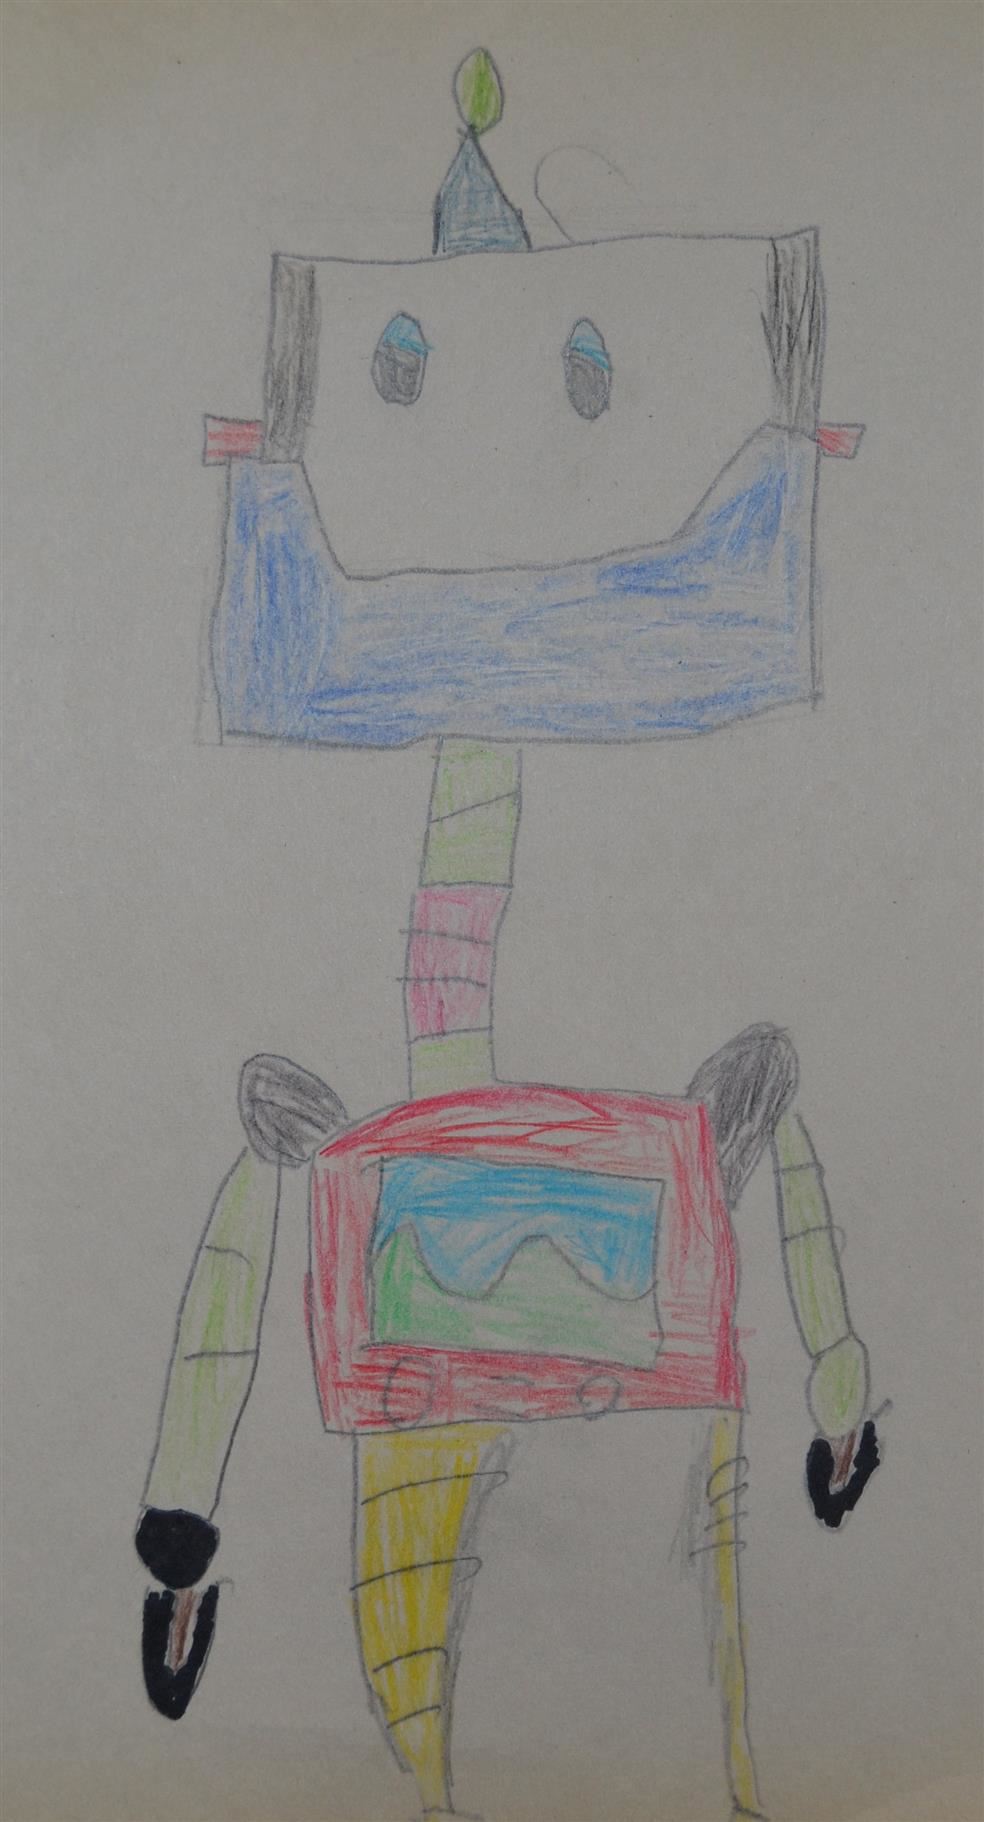 Space Robots by B.B. - 2nd Grade, Gifford